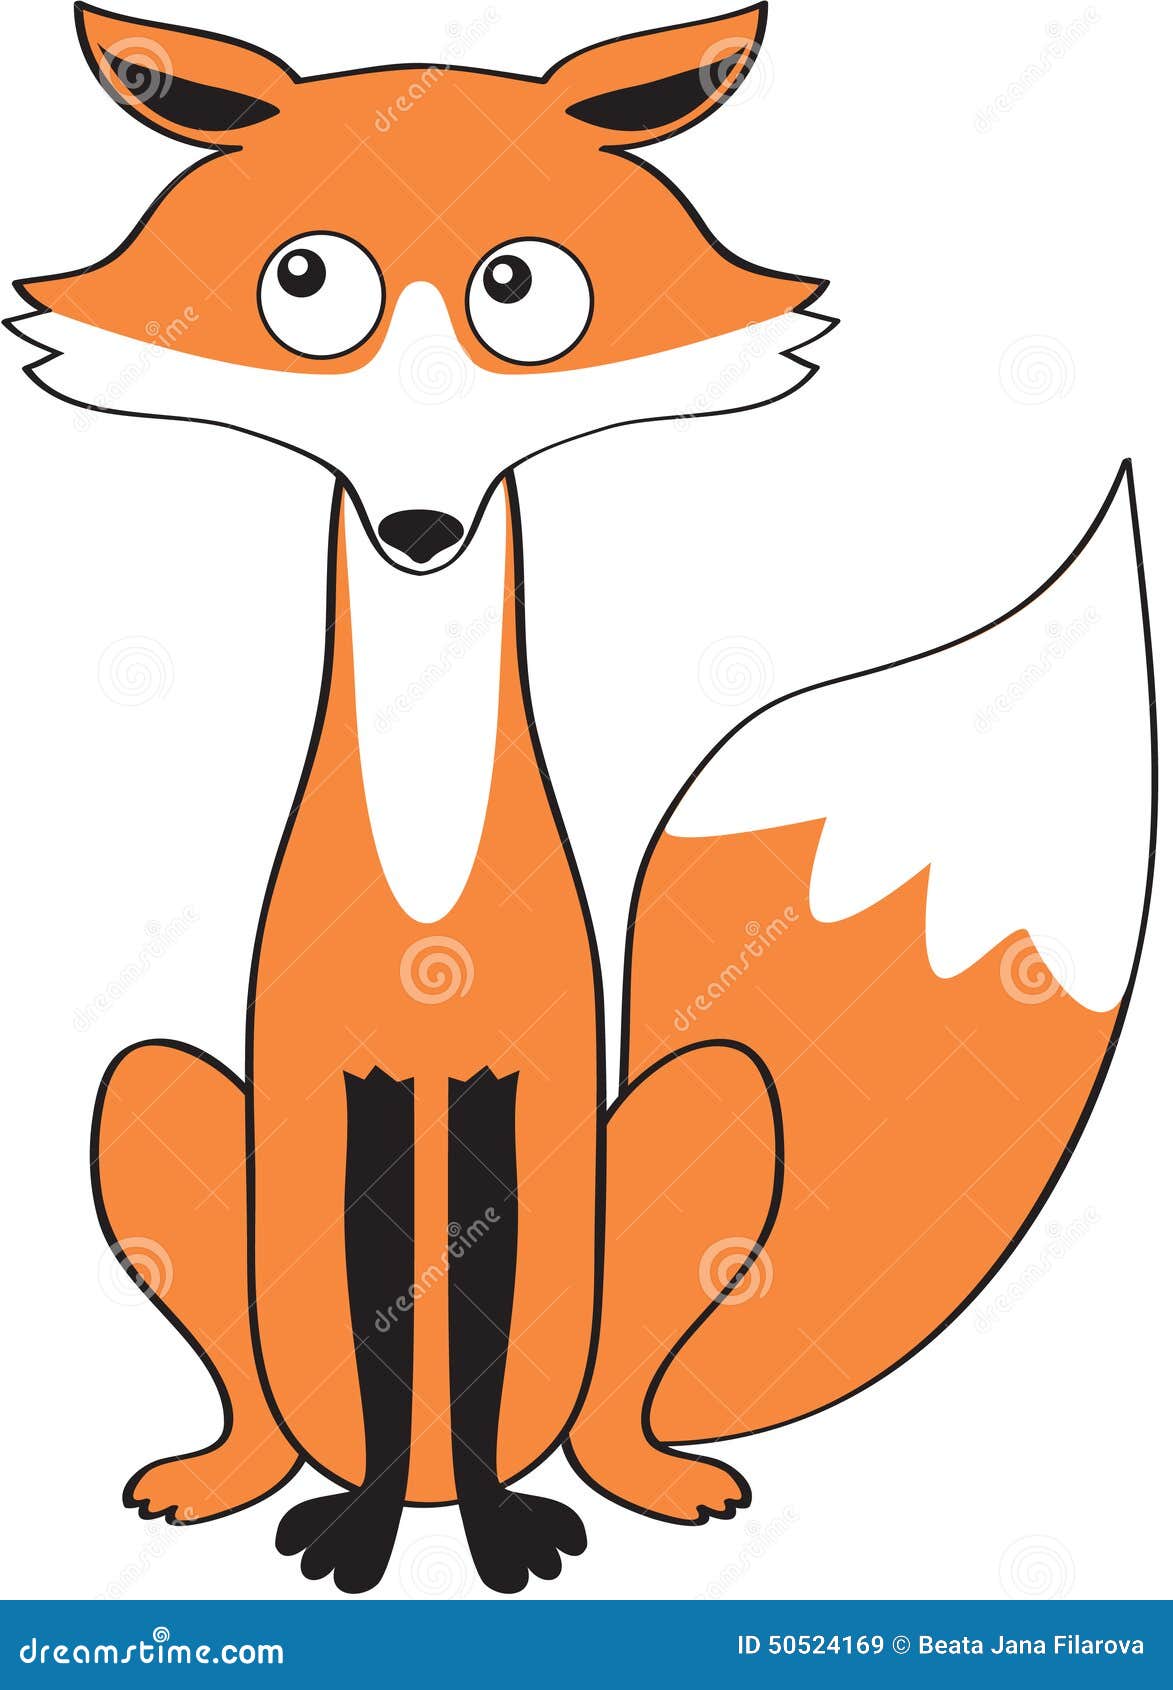 Cartoon character fox stock vector. Illustration of nature - 50524169